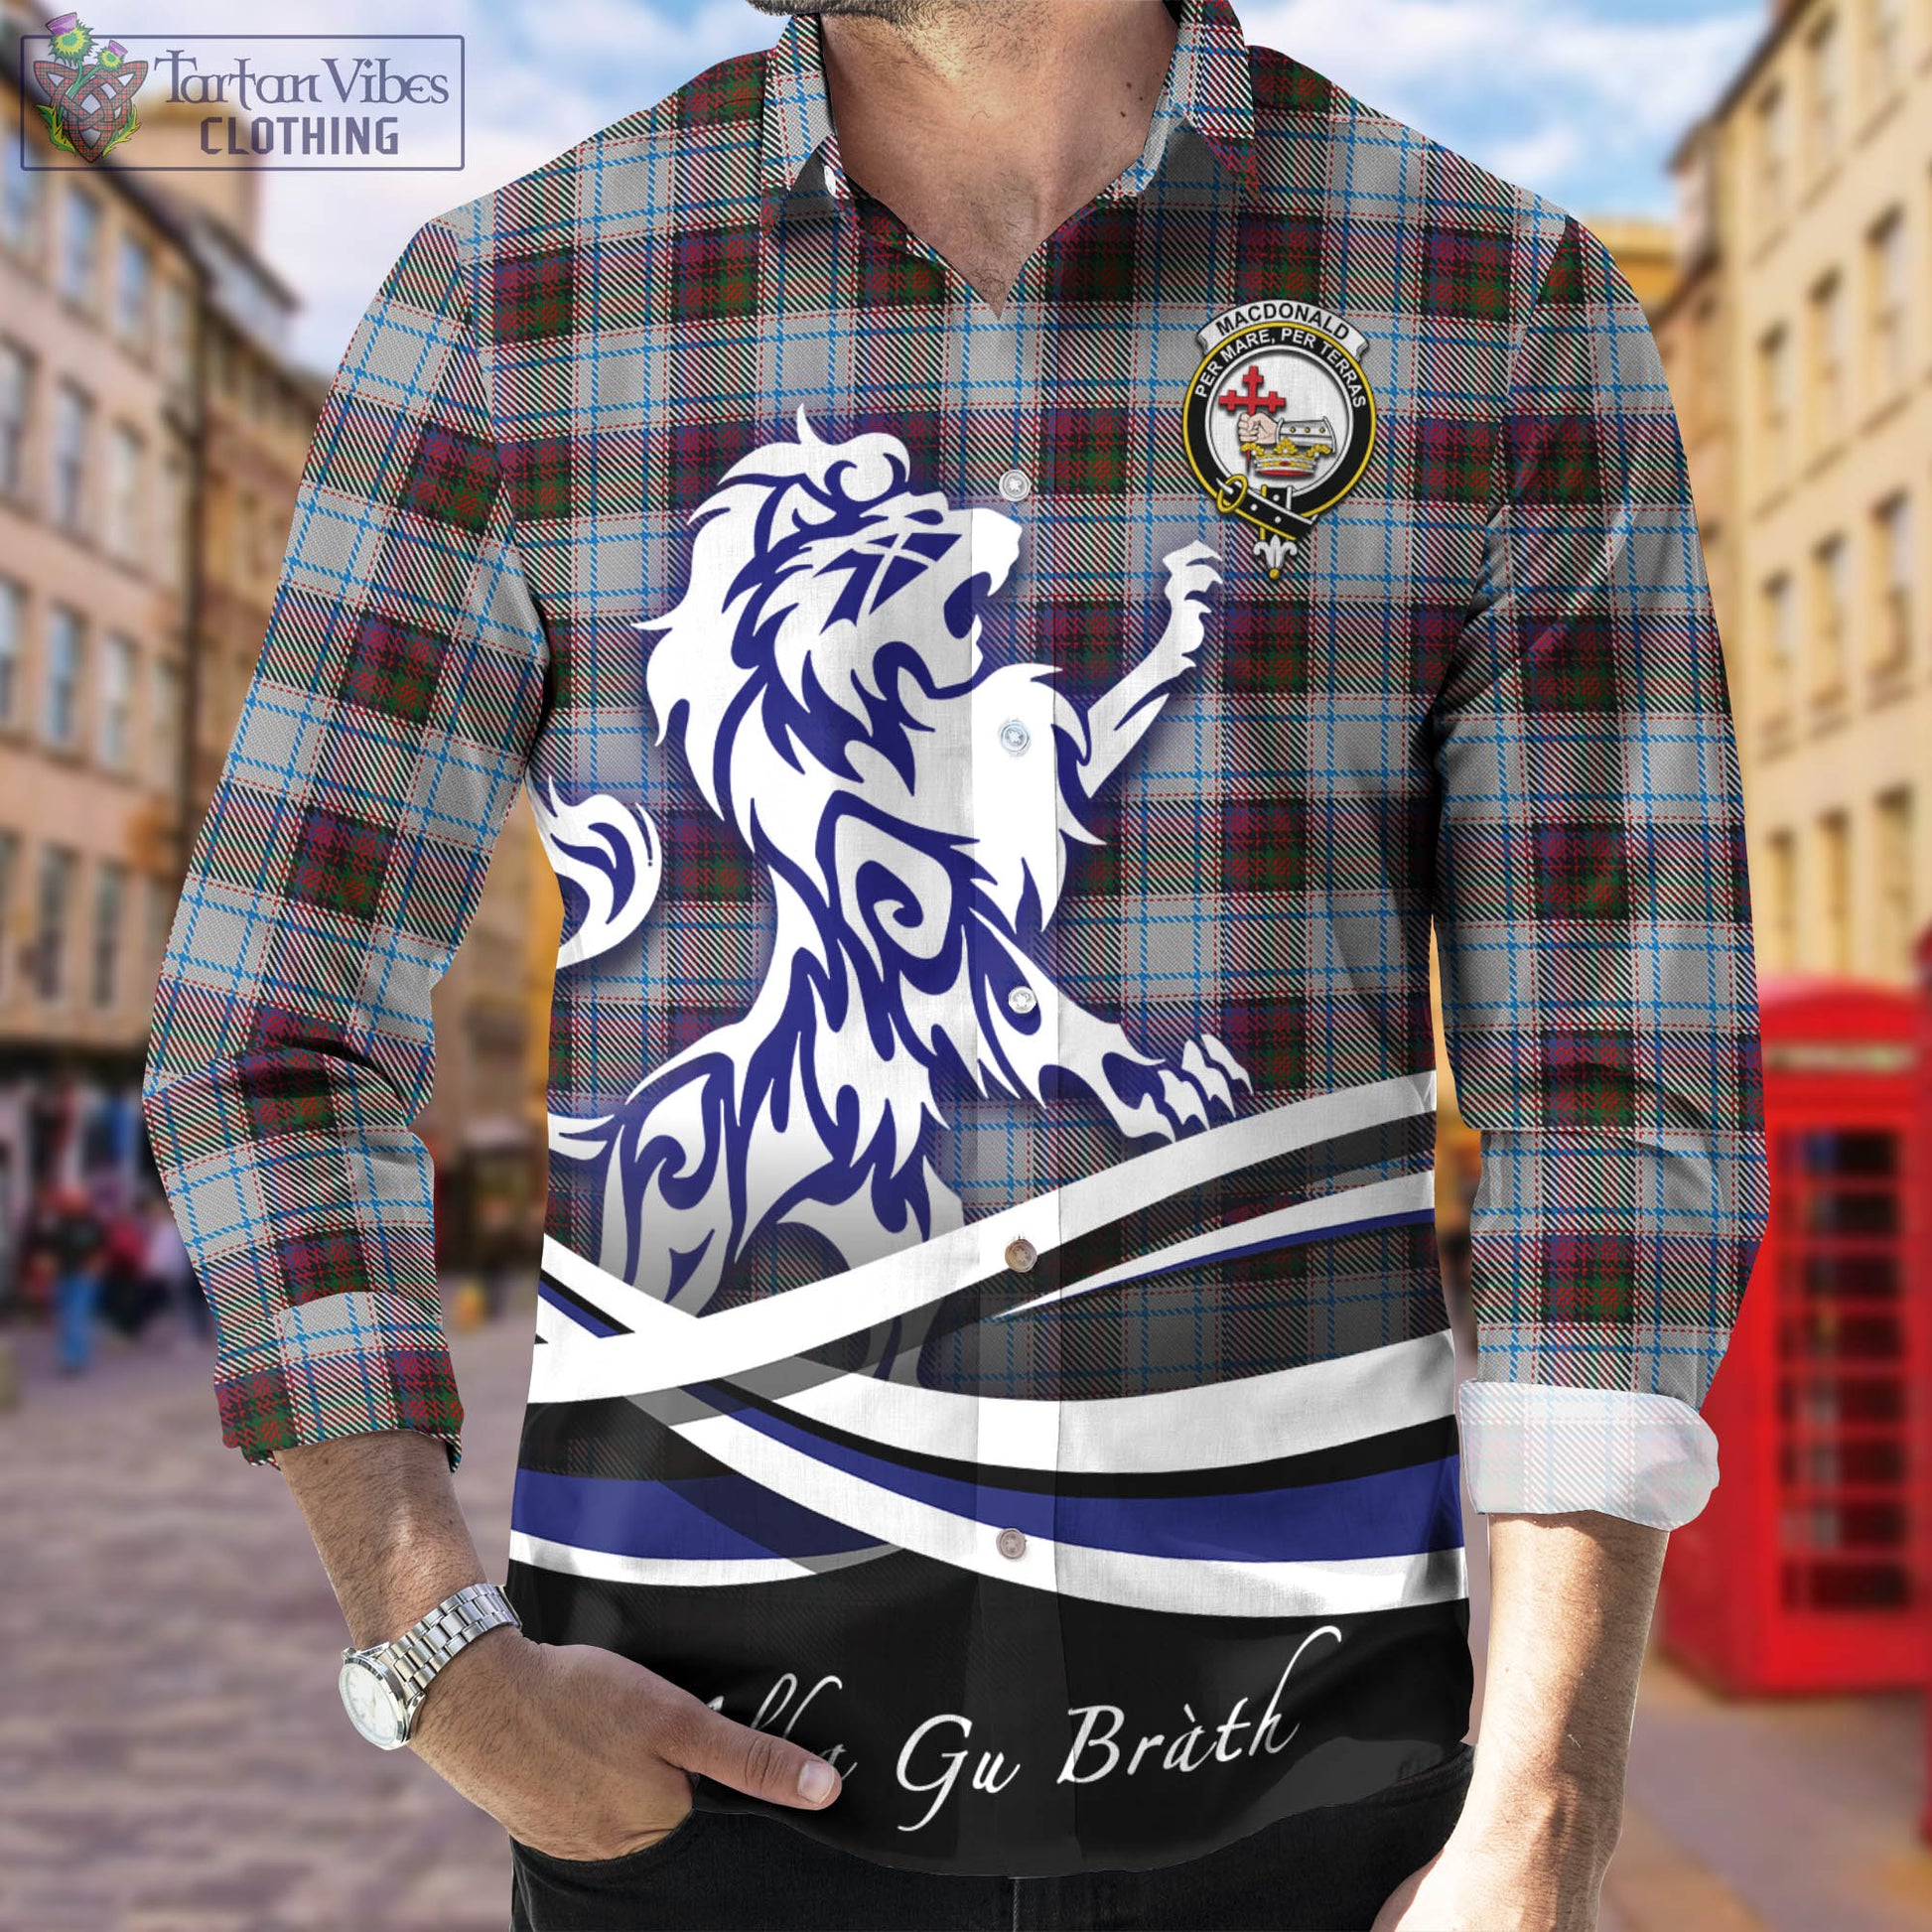 macdonald-dress-ancient-tartan-long-sleeve-button-up-shirt-with-alba-gu-brath-regal-lion-emblem